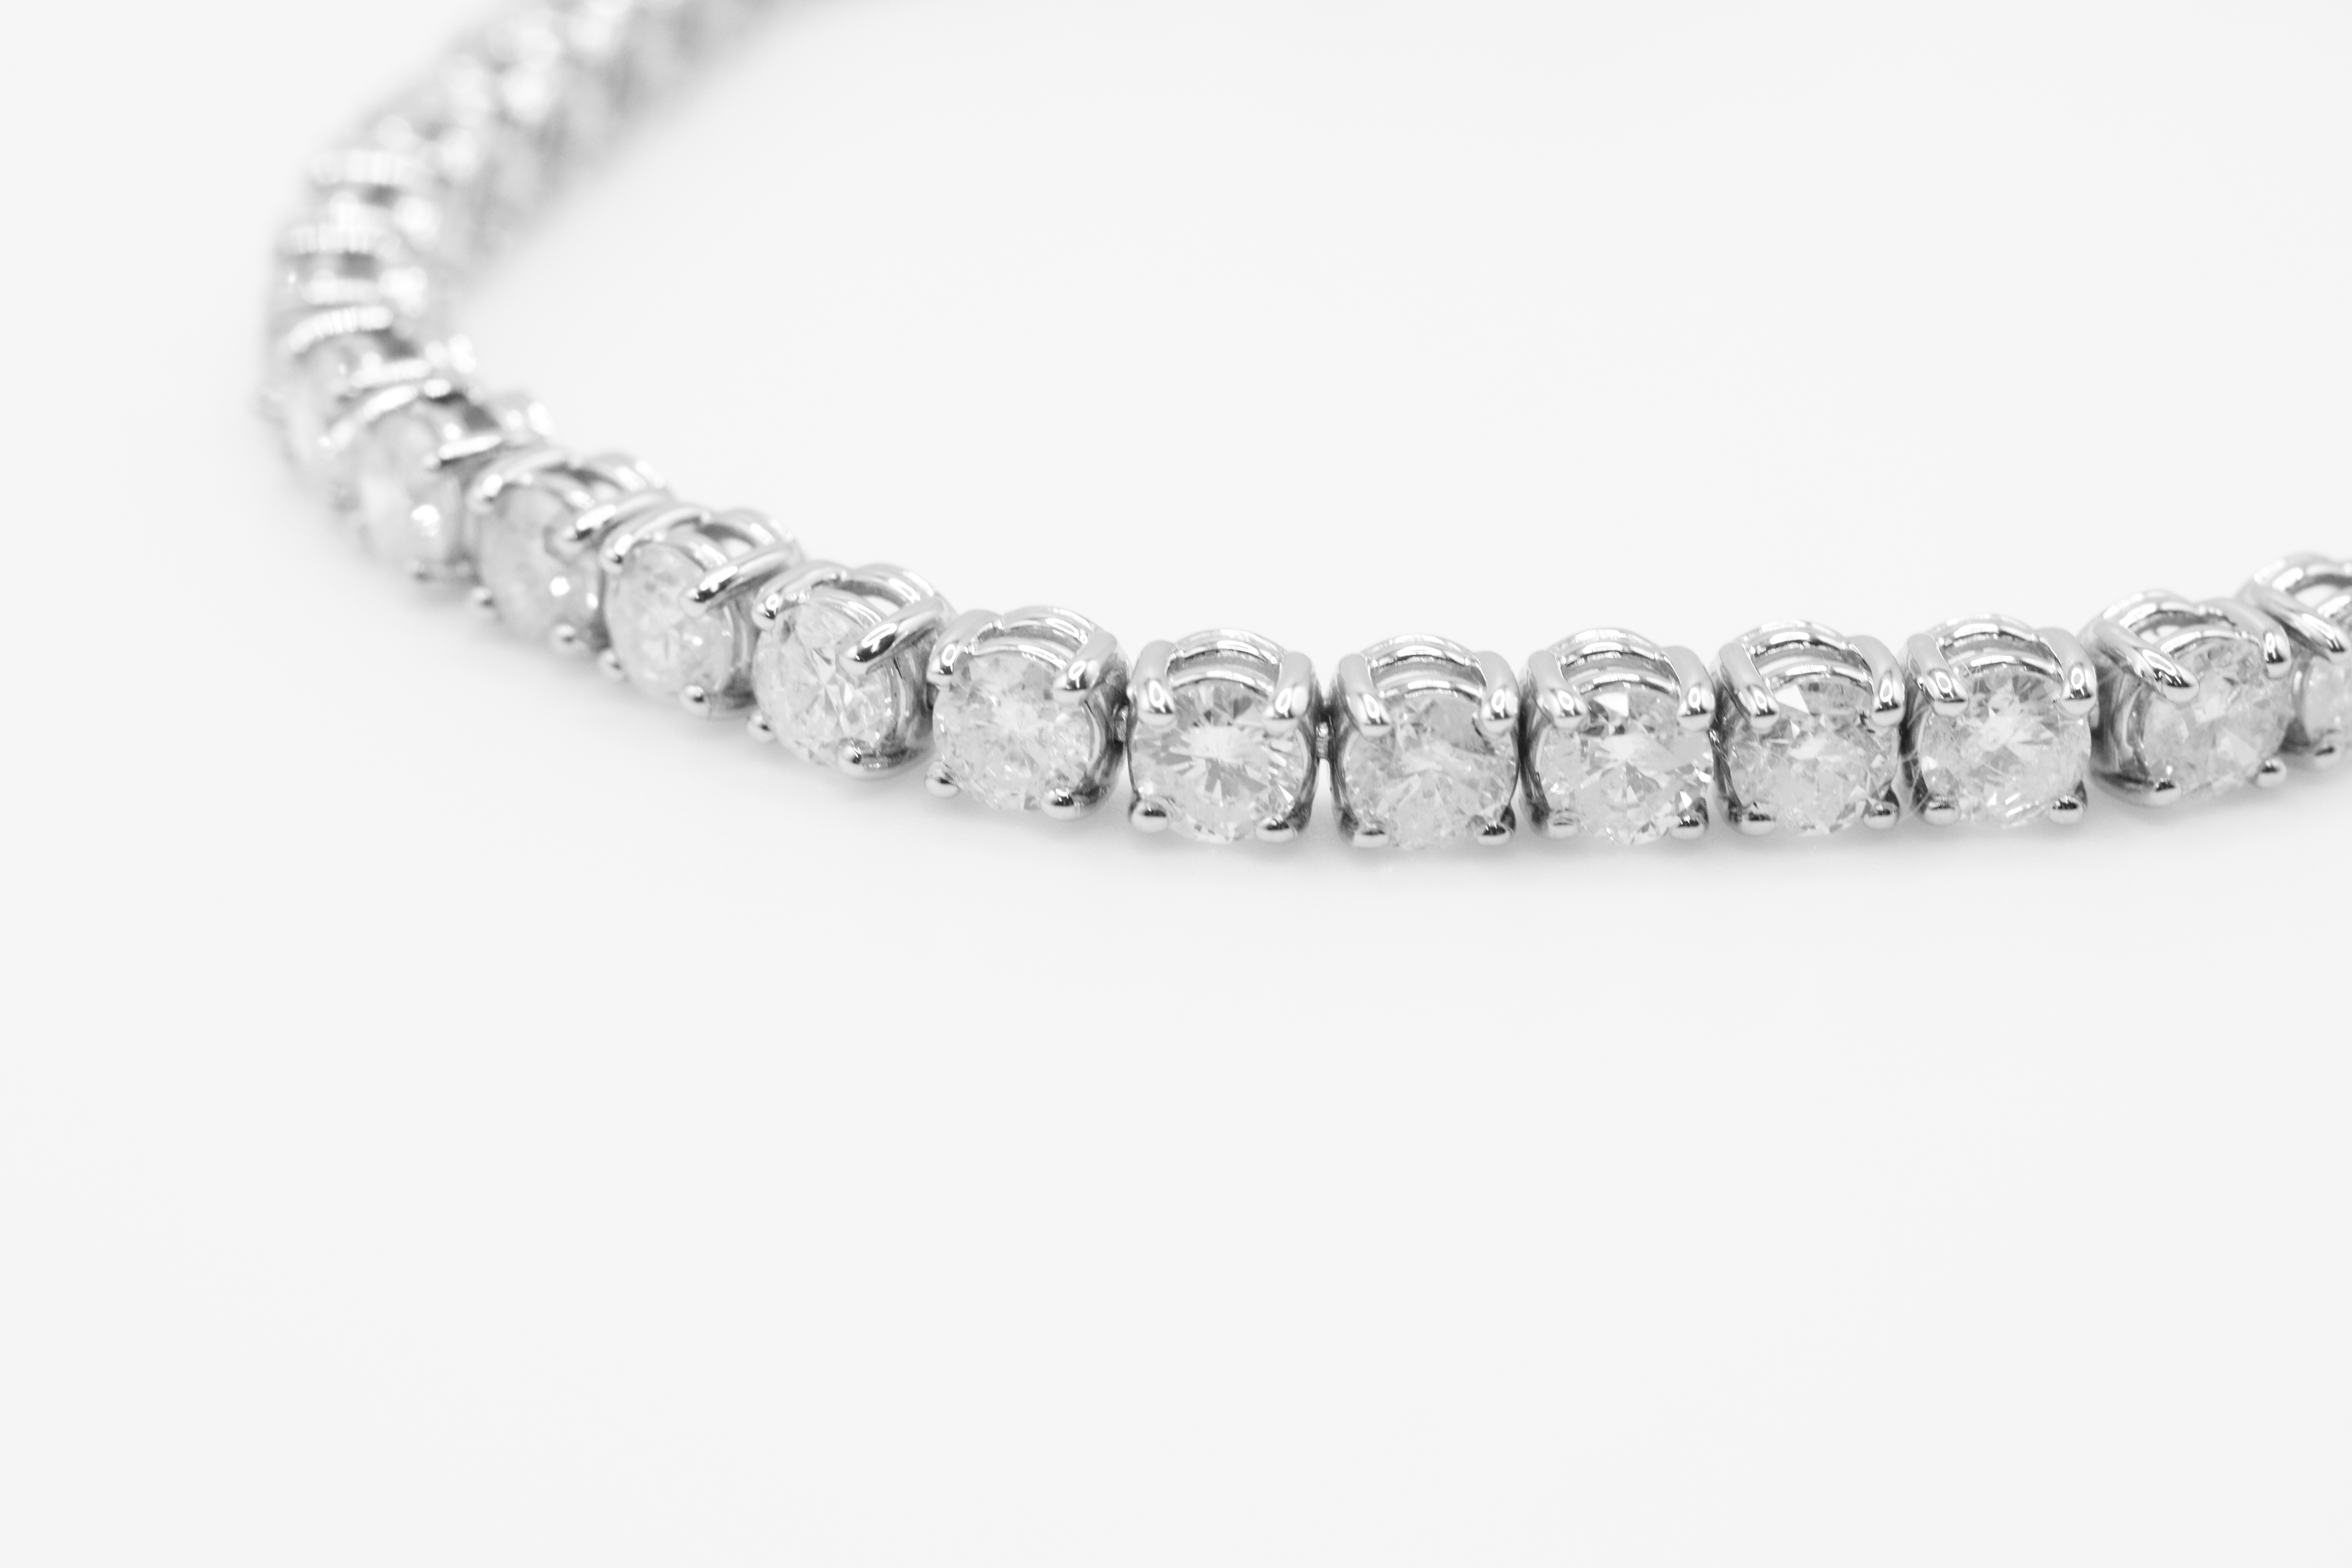 ** ON SALE **9.0 Carat 18ct White Gold Tennis Bracelet set with Round Brilliant Cut Natural Diamonds - Image 2 of 17